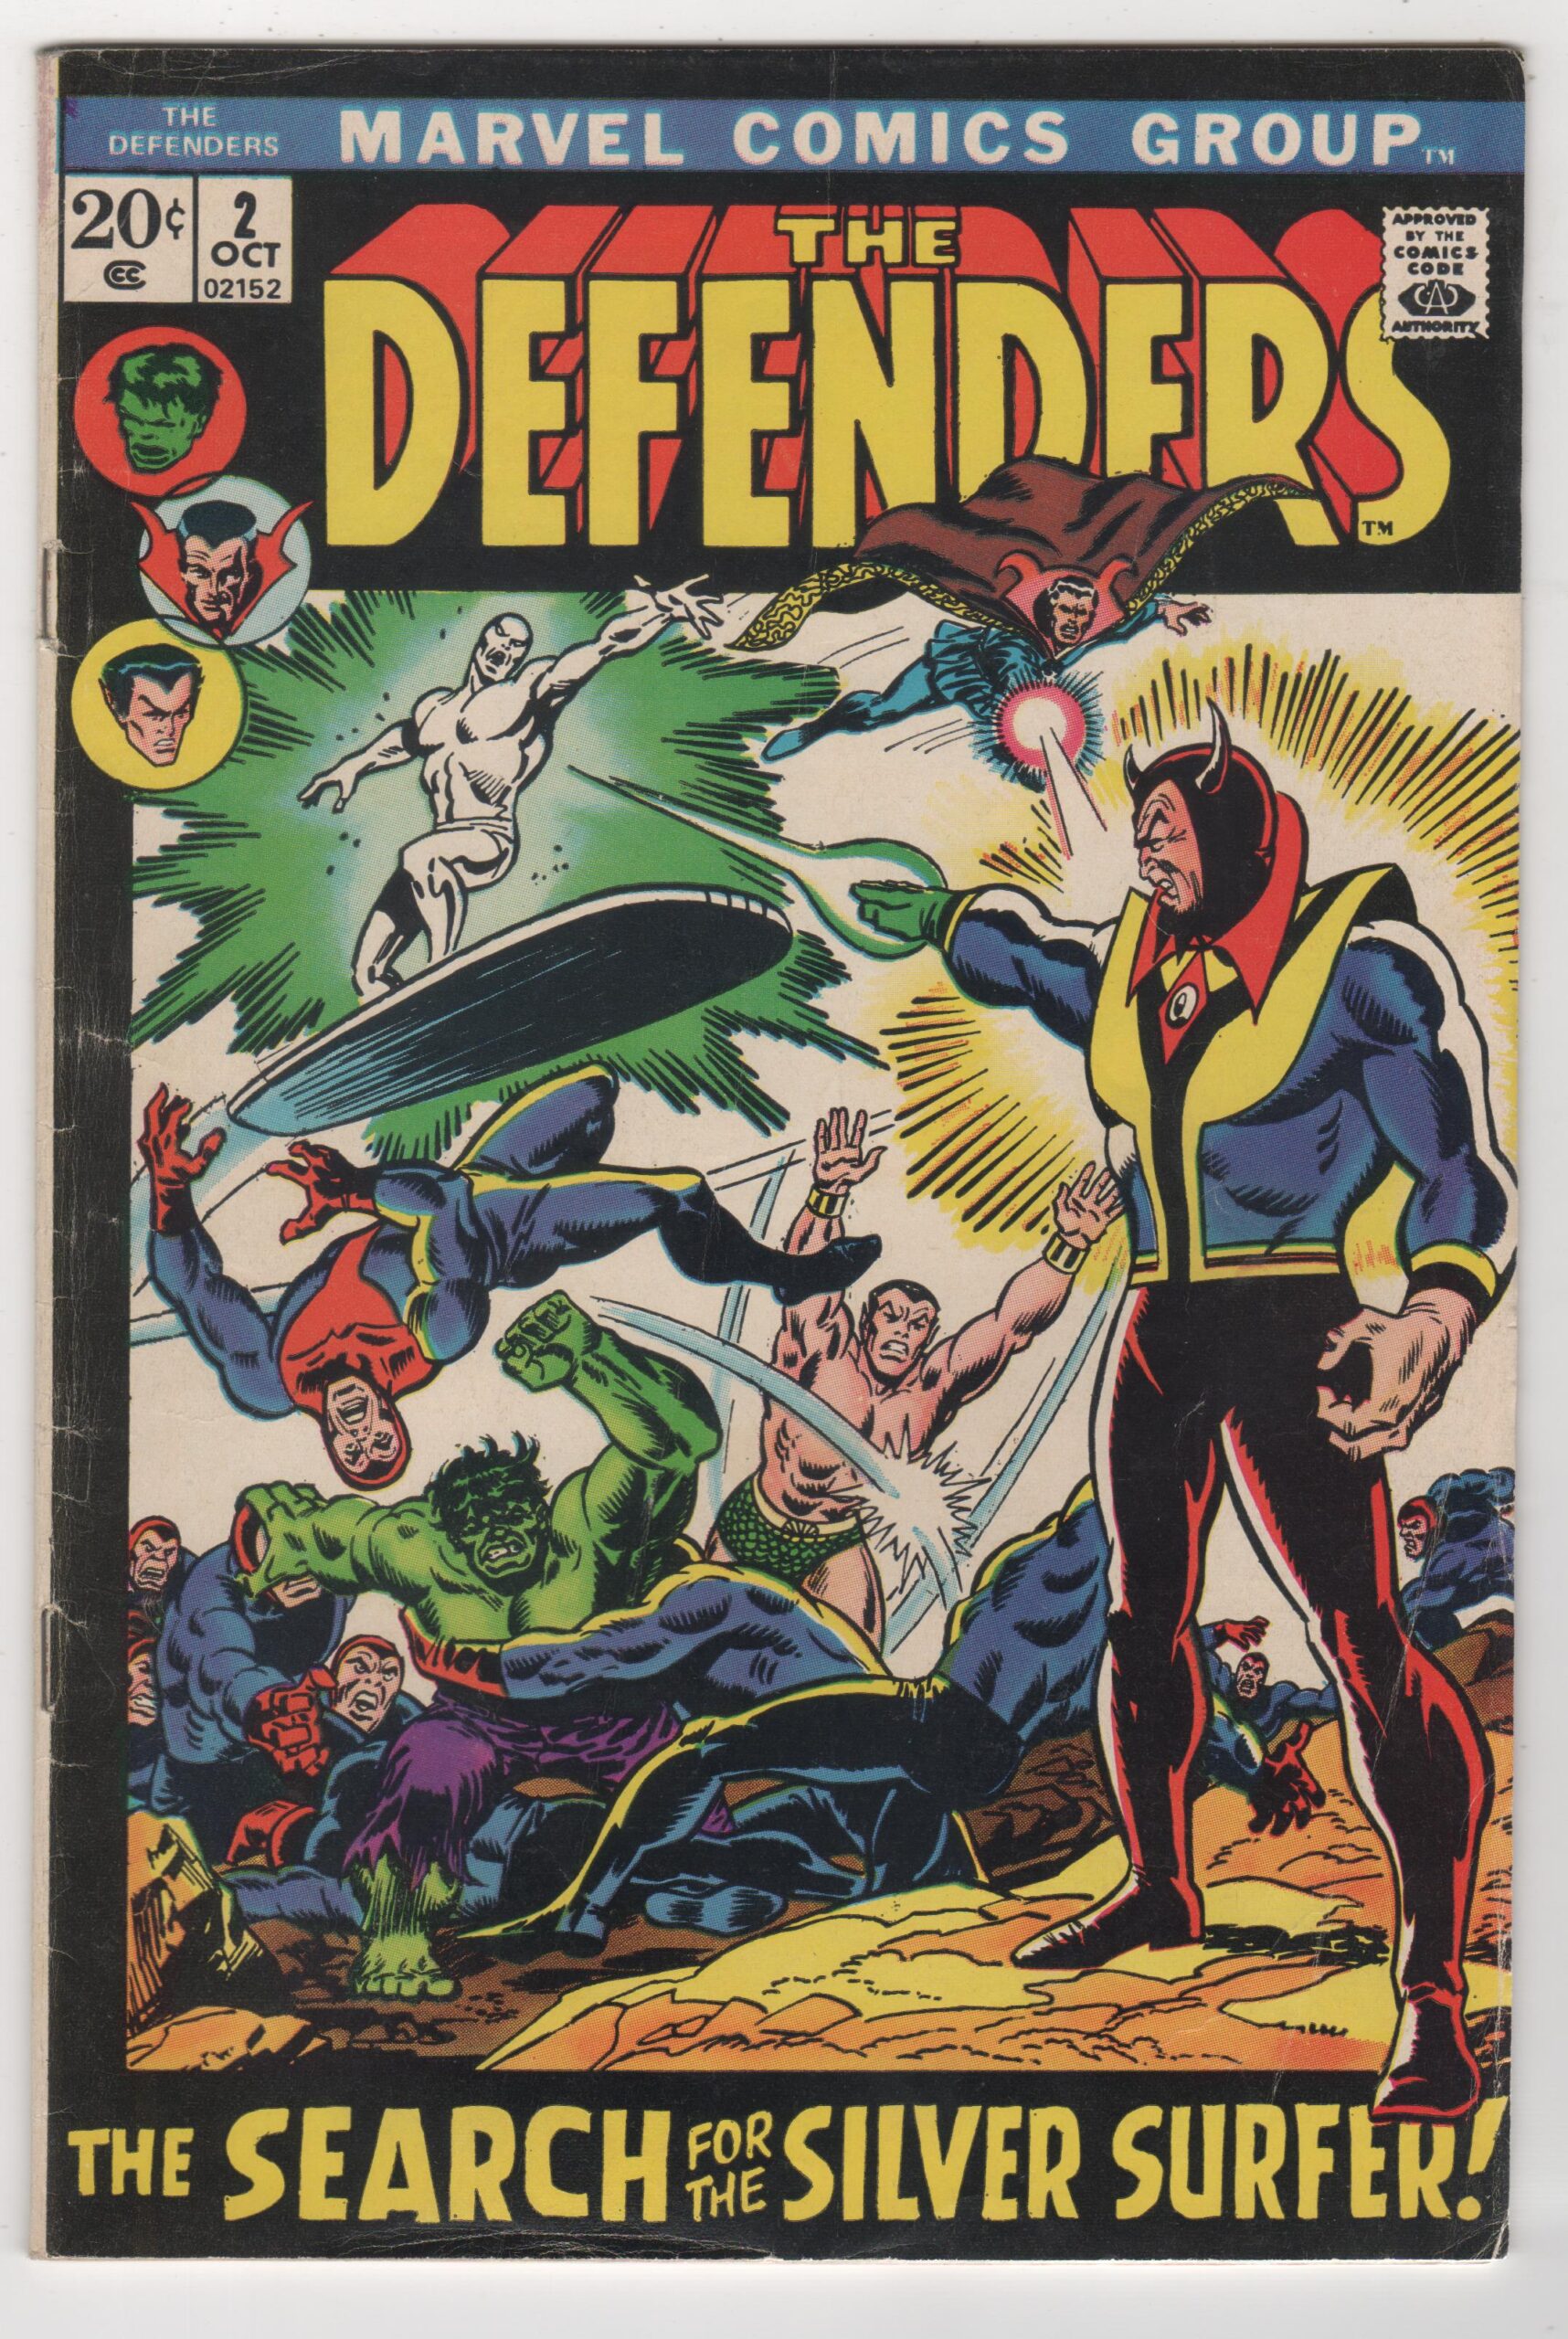 Defenders #2 Steve Englehart and Sal Buscema 1972 Marvel Comics Bronze age